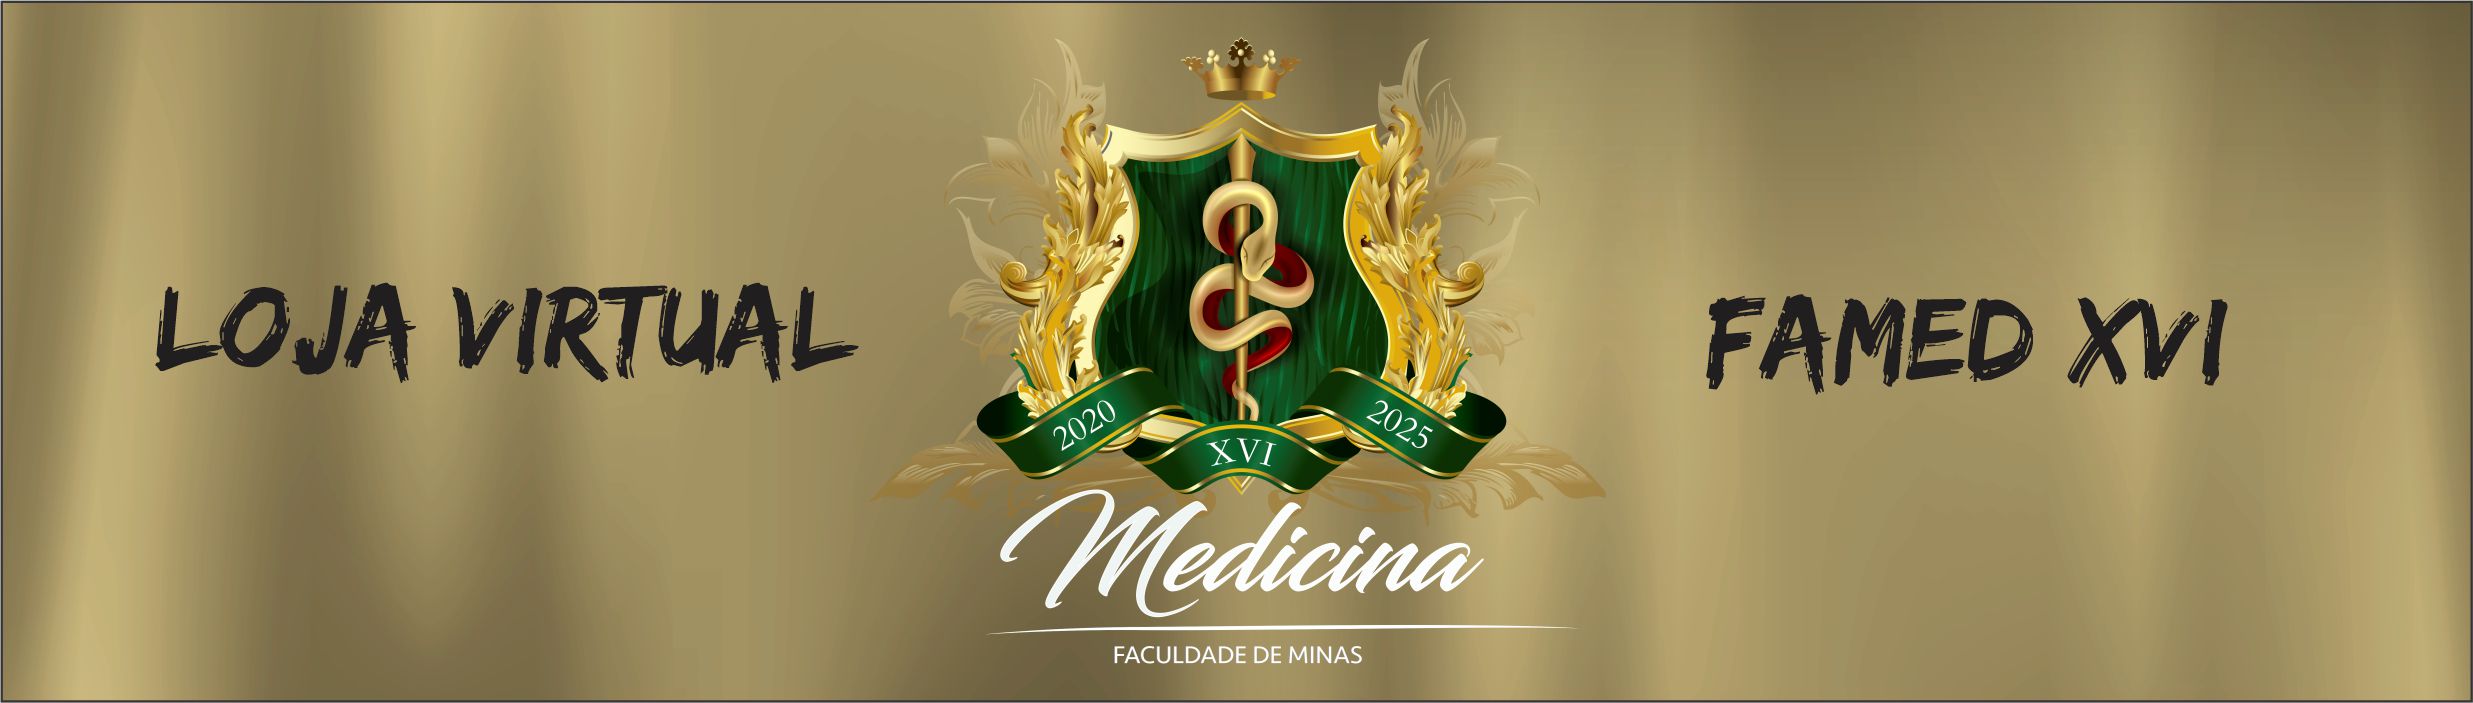 Medicina FAMINAS XVI